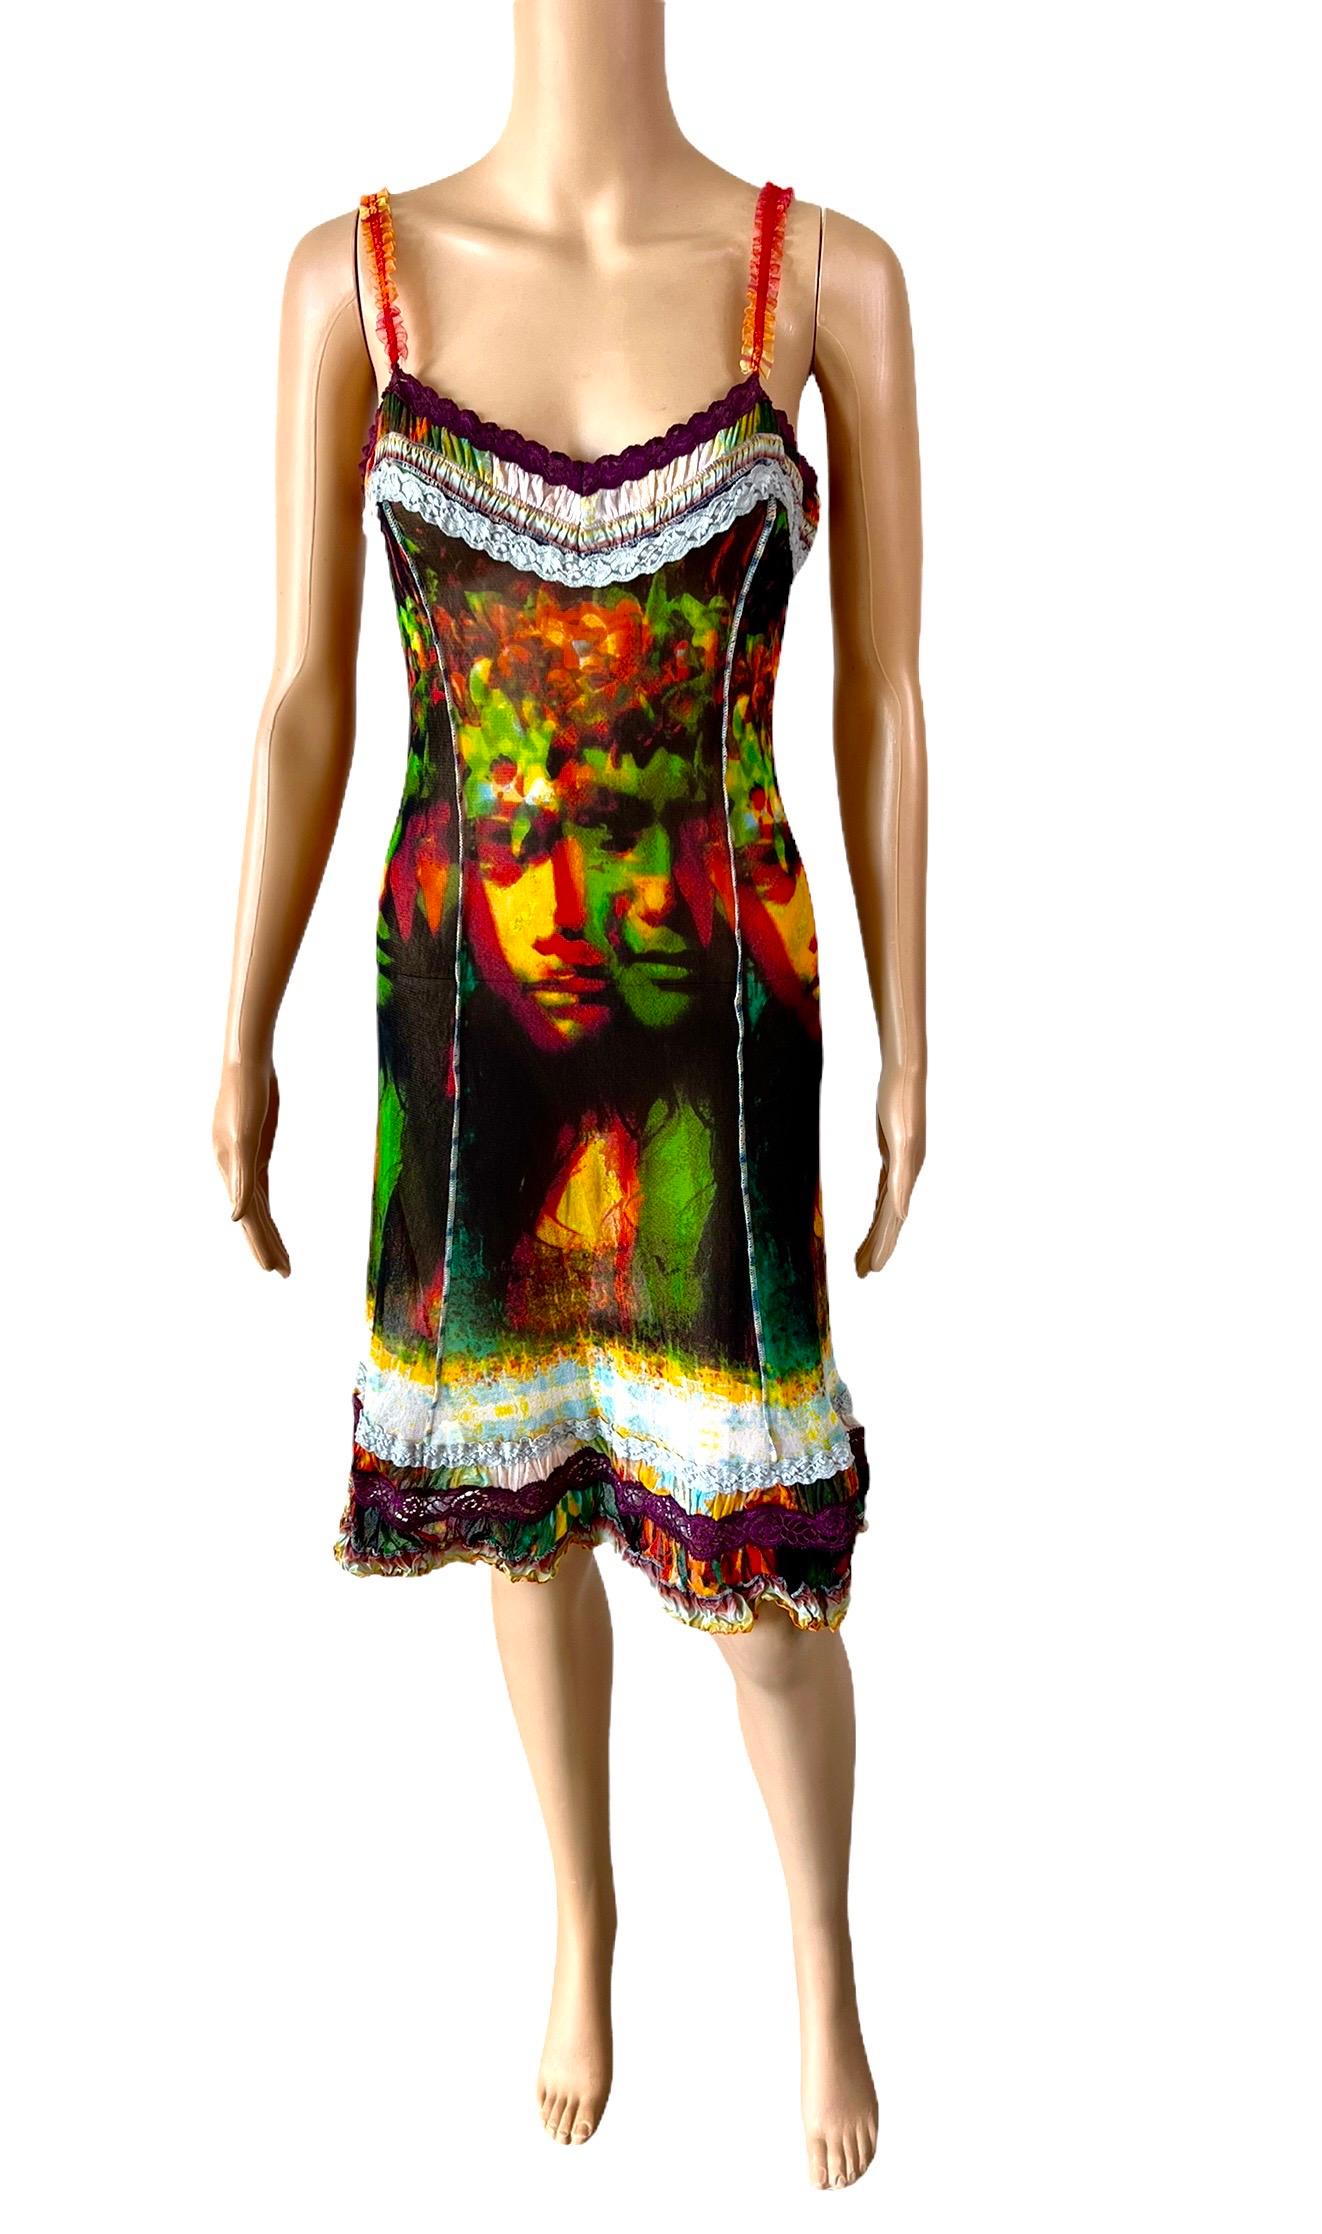 Jean Paul Gaultier S/S 2000 Vintage Psychedelic Semi-Sheer Mesh Dress Size M



